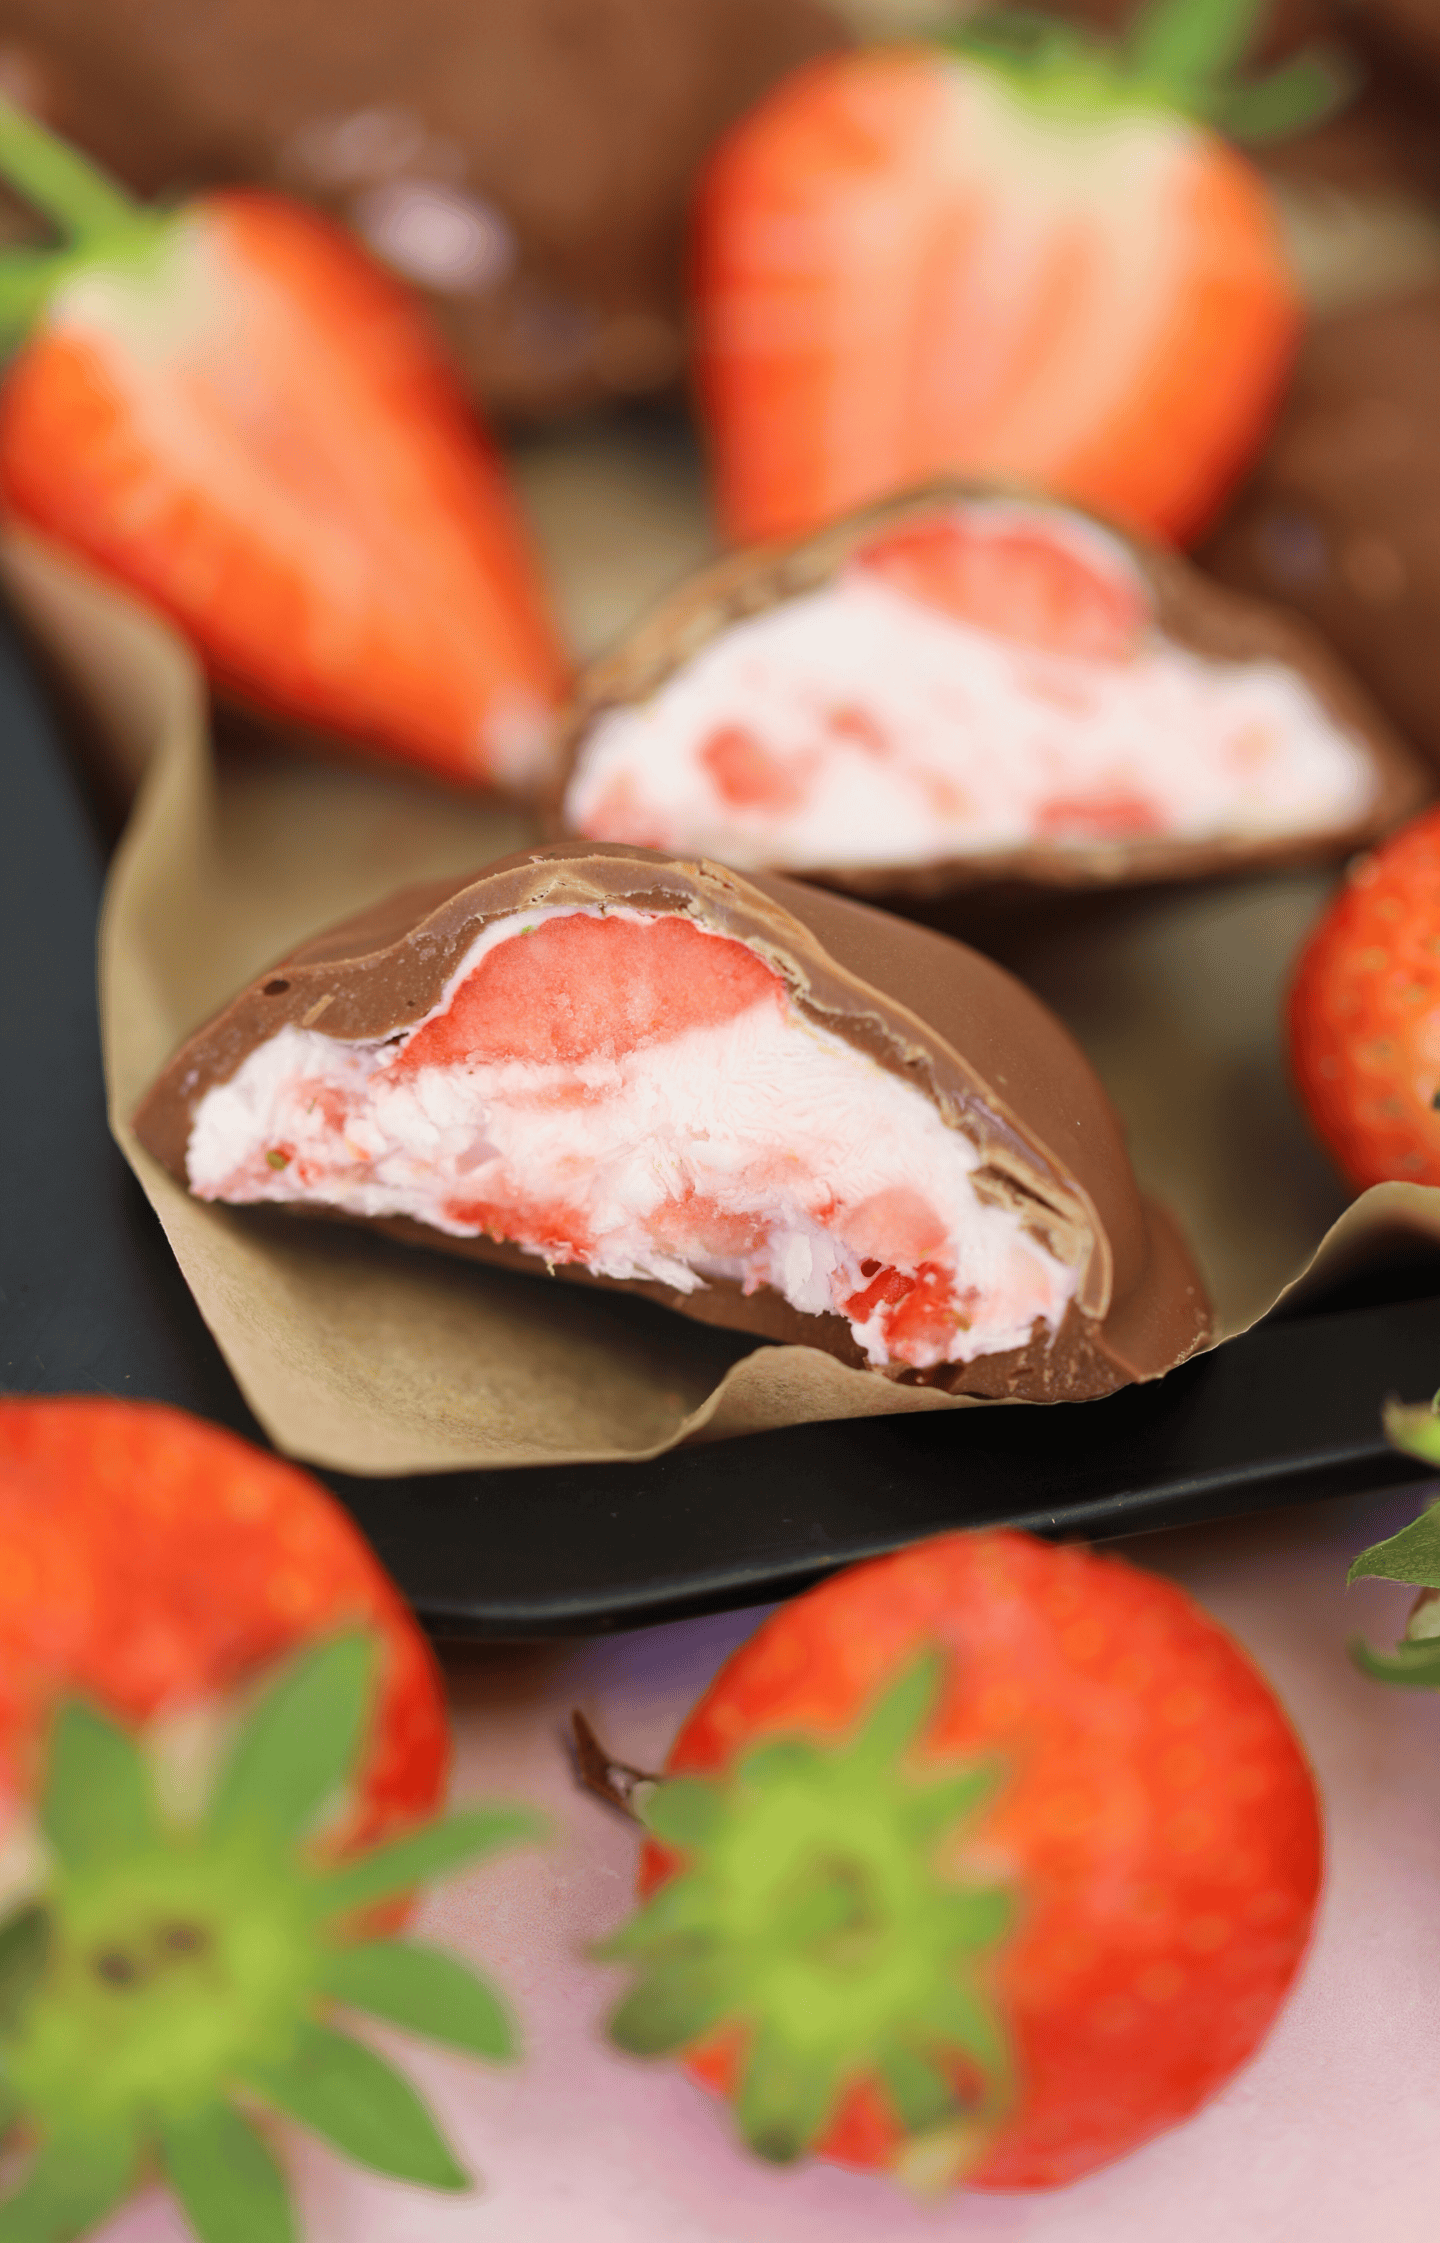 Frozen strawberry yoghurt bites covered in chocolate.